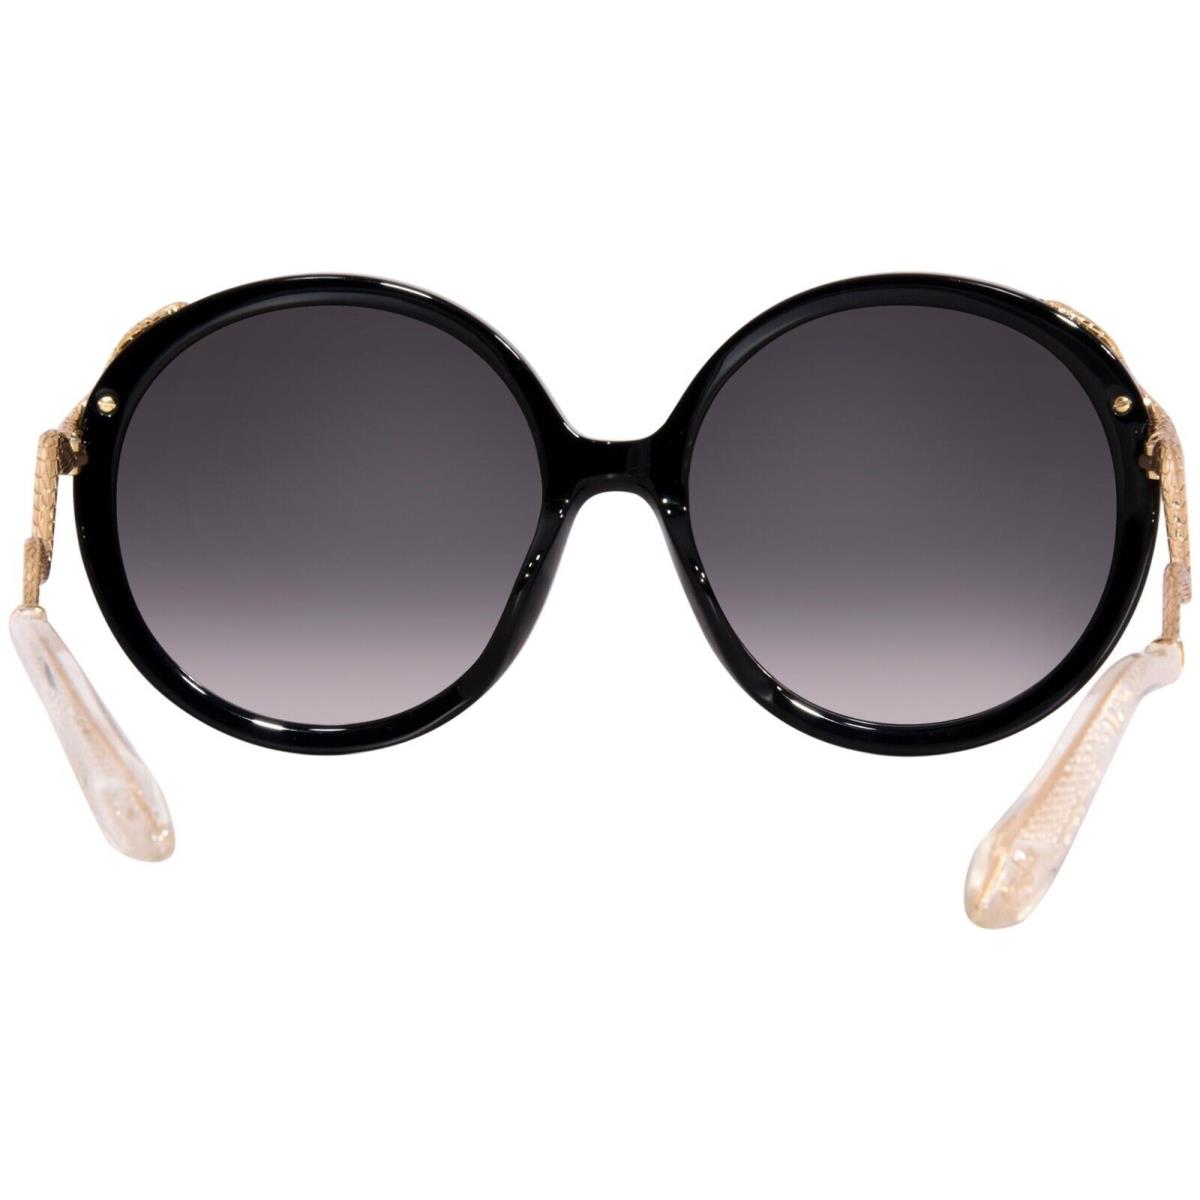 Roberto Cavalli Sunglasses SRC004 0700 Women`s Black/grey Gradient